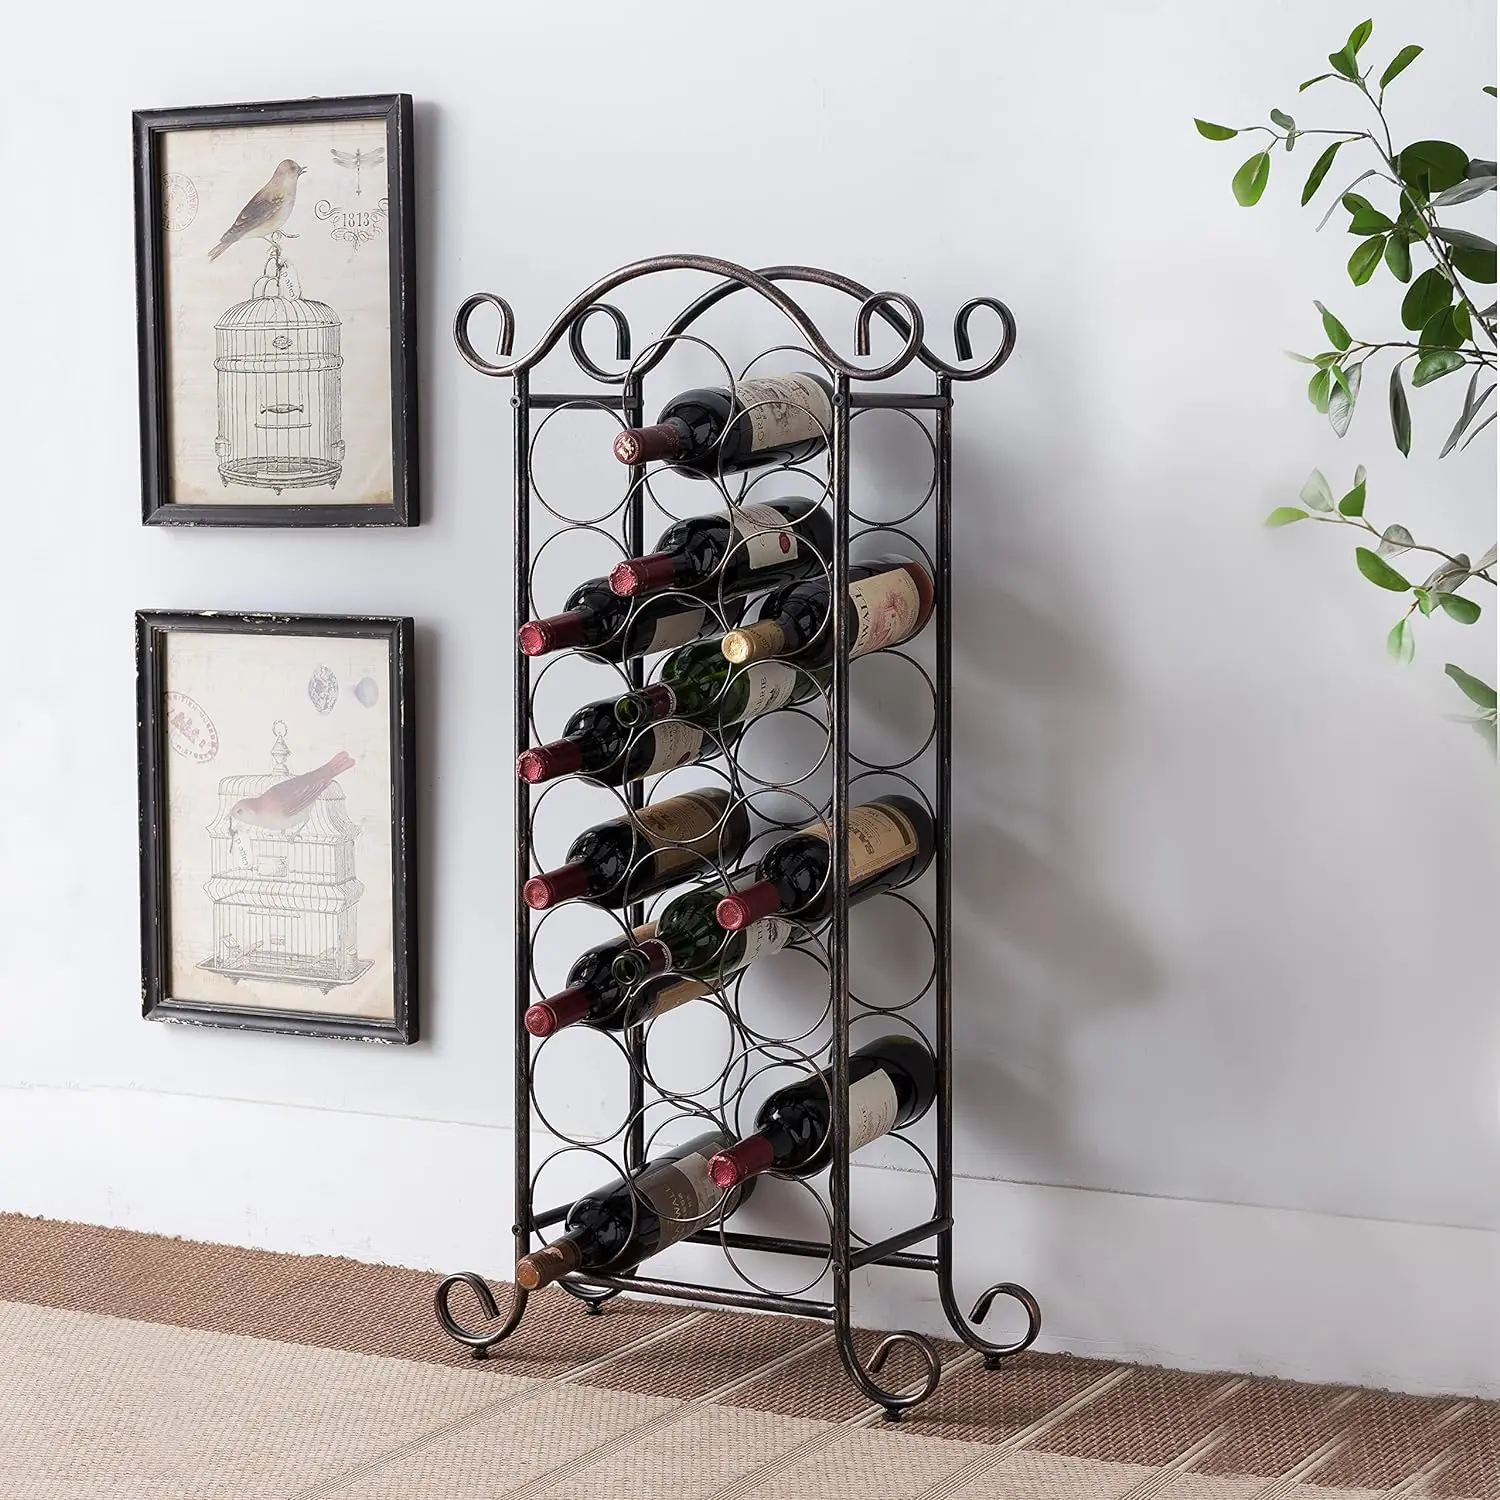 

Brushed Copper Floor Freestanding Metal Wine , Wine Bottle Holder Stands - Holds up to 21 Bottles Garrafa de vidro whisky Three